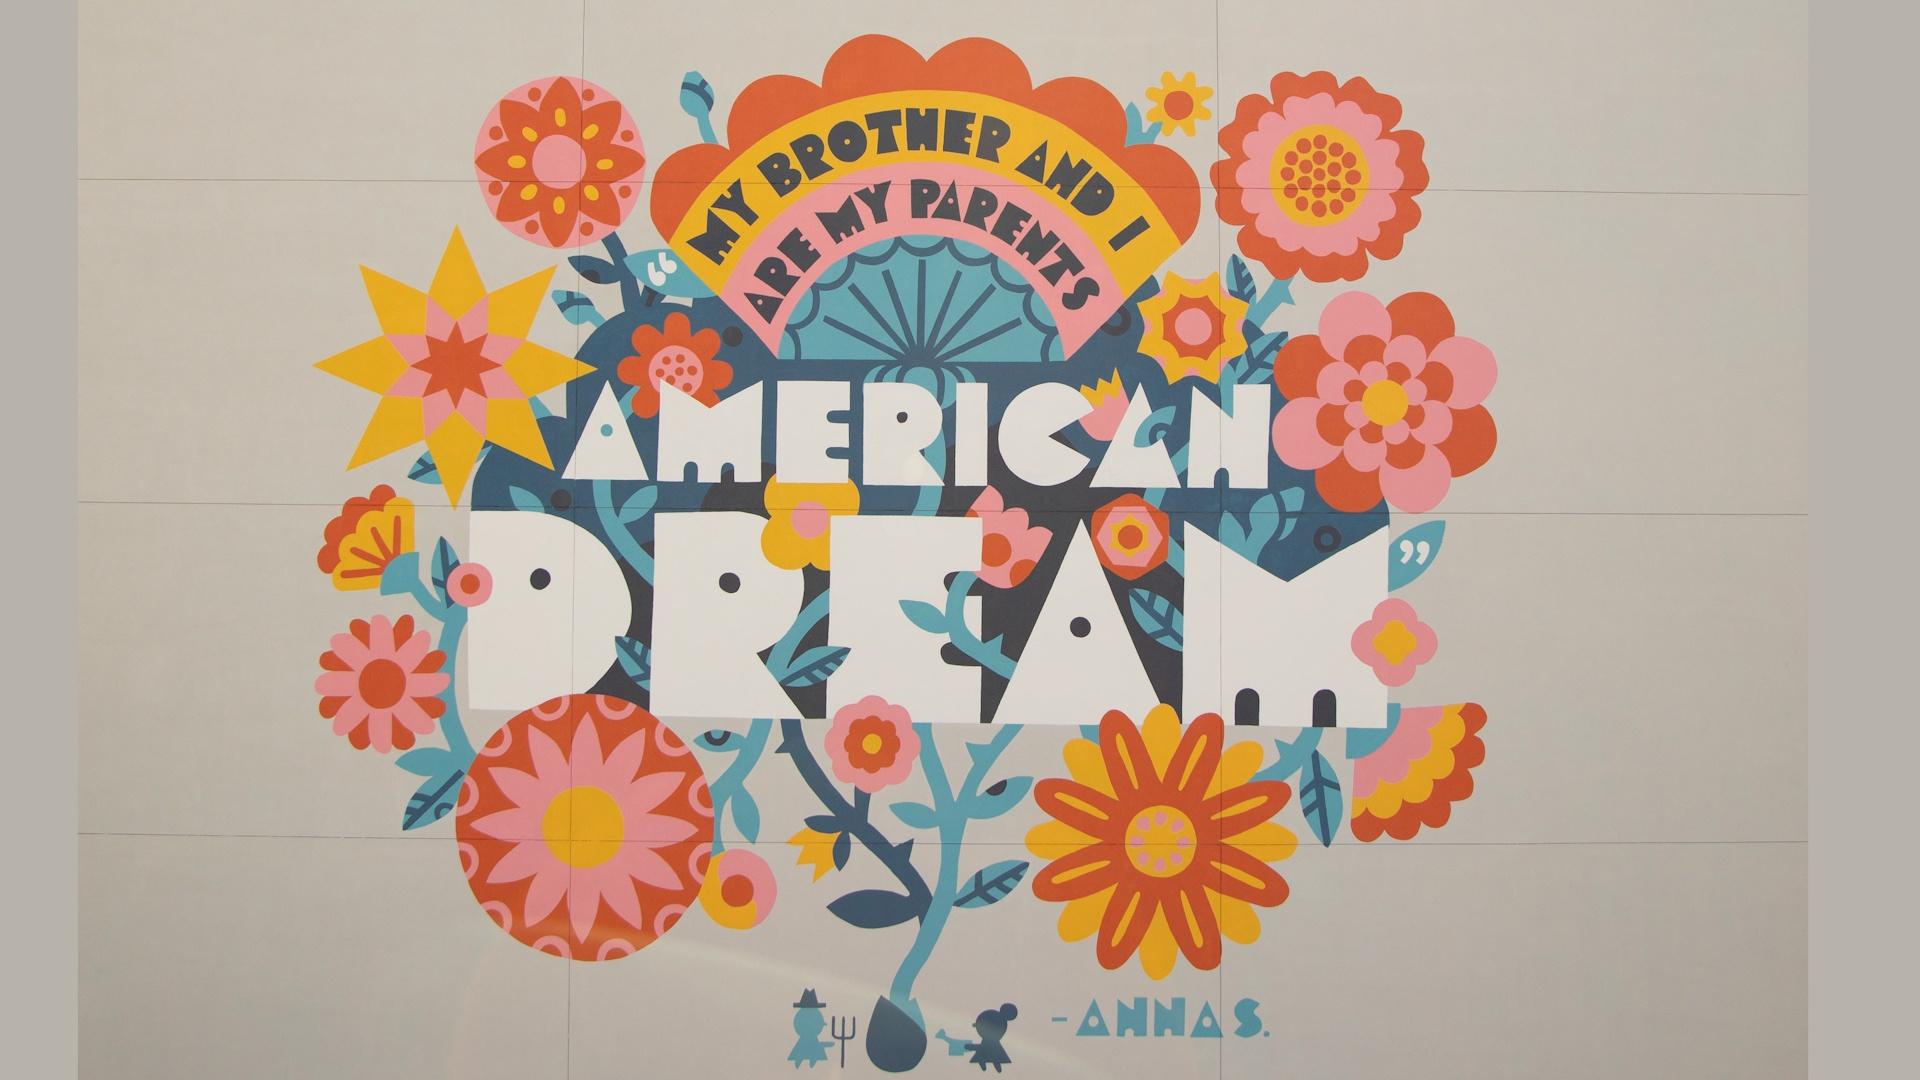 American Dream Wall Mural